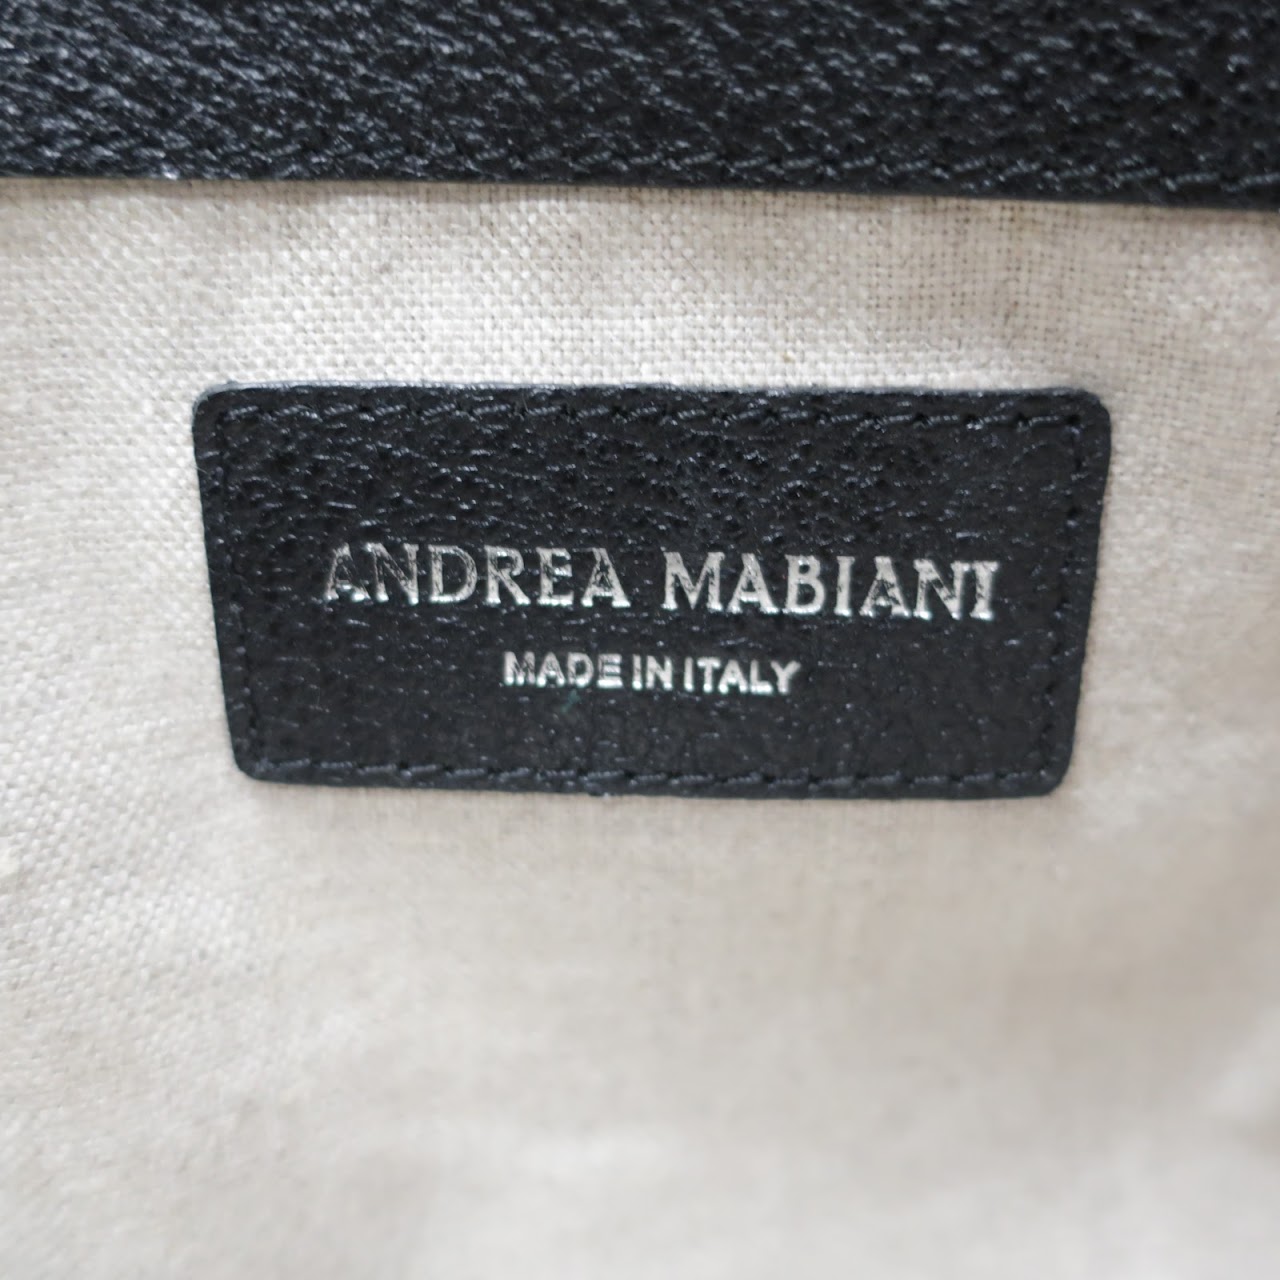 Andrea Mabiani Leather Satchel